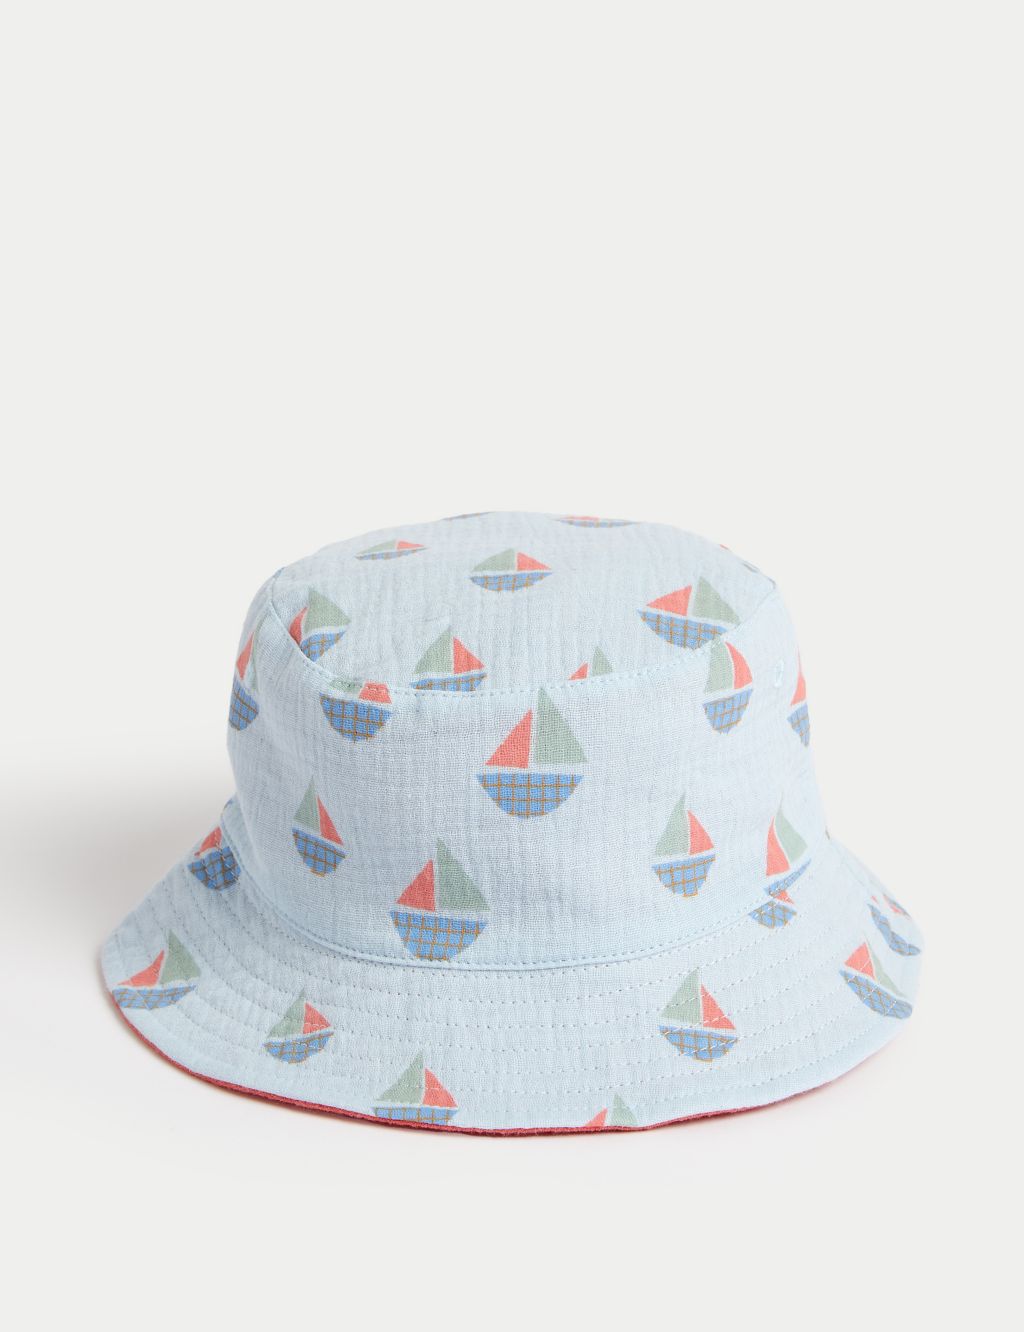 Kids' Pure Cotton Reversible Sun Hat (1 - 6 Yrs) image 1